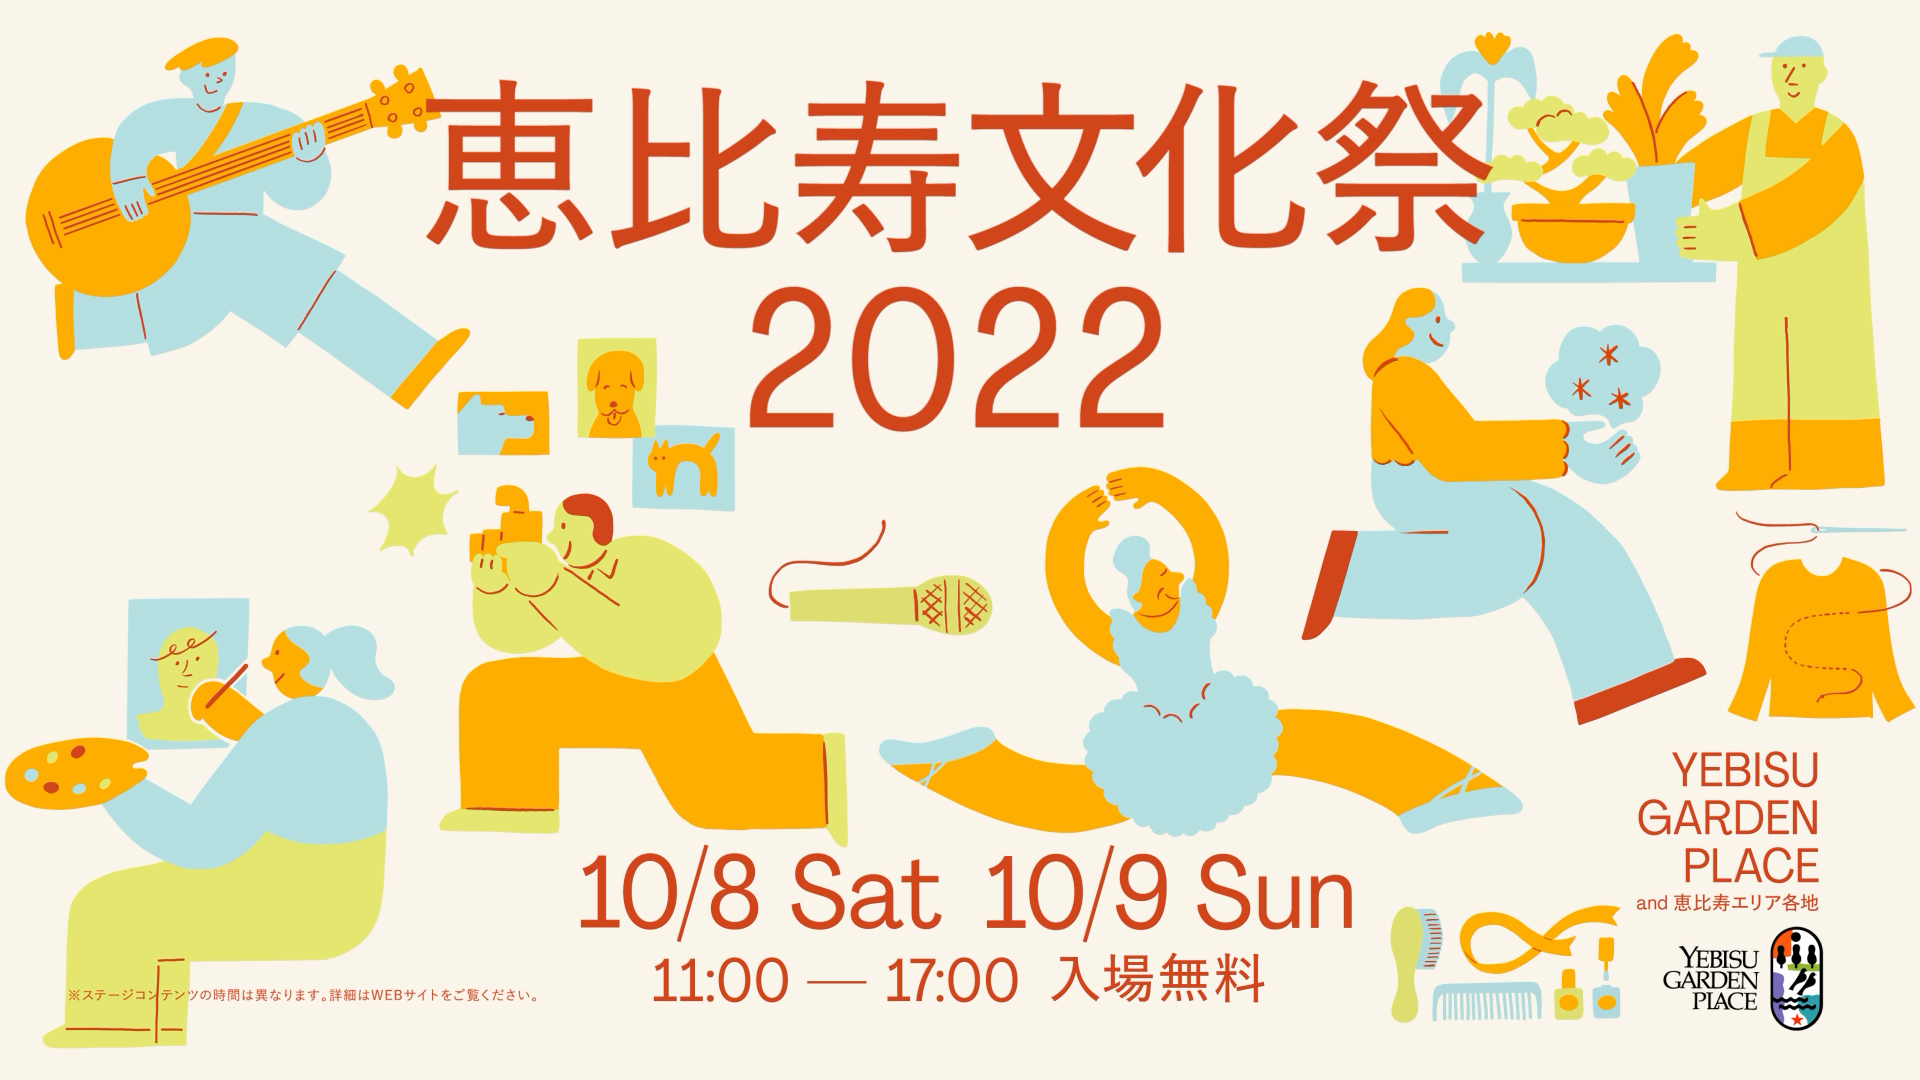 ROBOTとともに恵比寿文化祭2022に参加。恵比寿に集う人々に、映像を通じて希望と楽しさを。